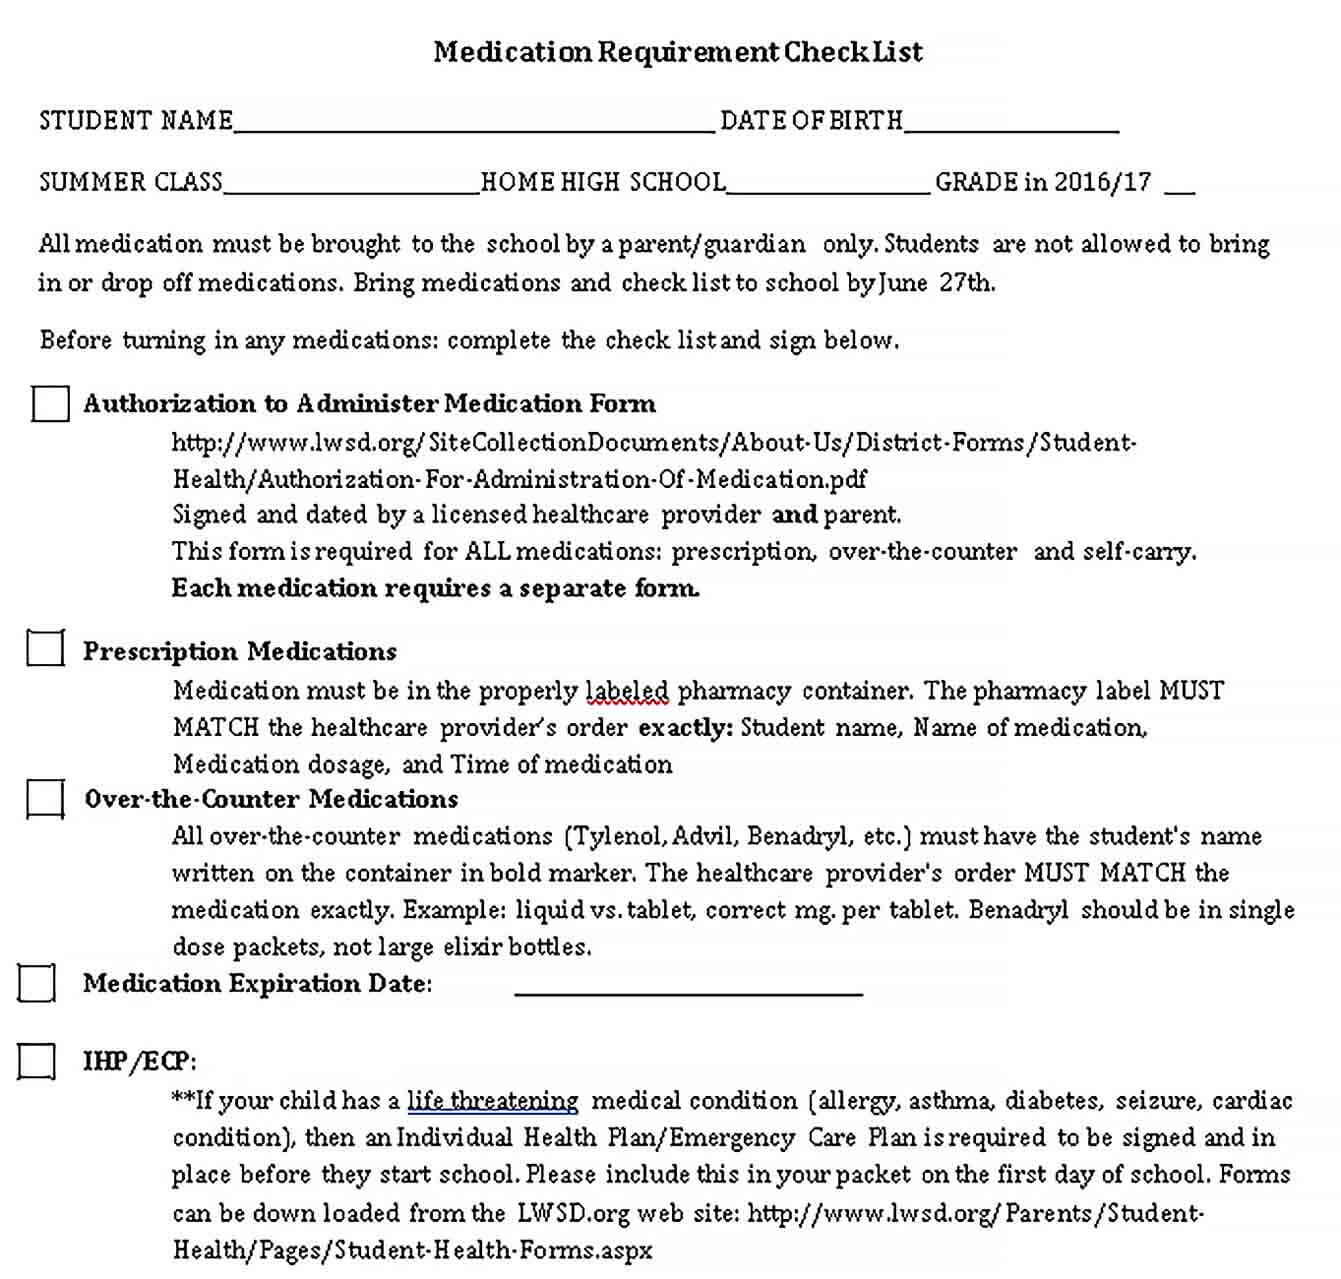 Sample Medication Requirement Checklist